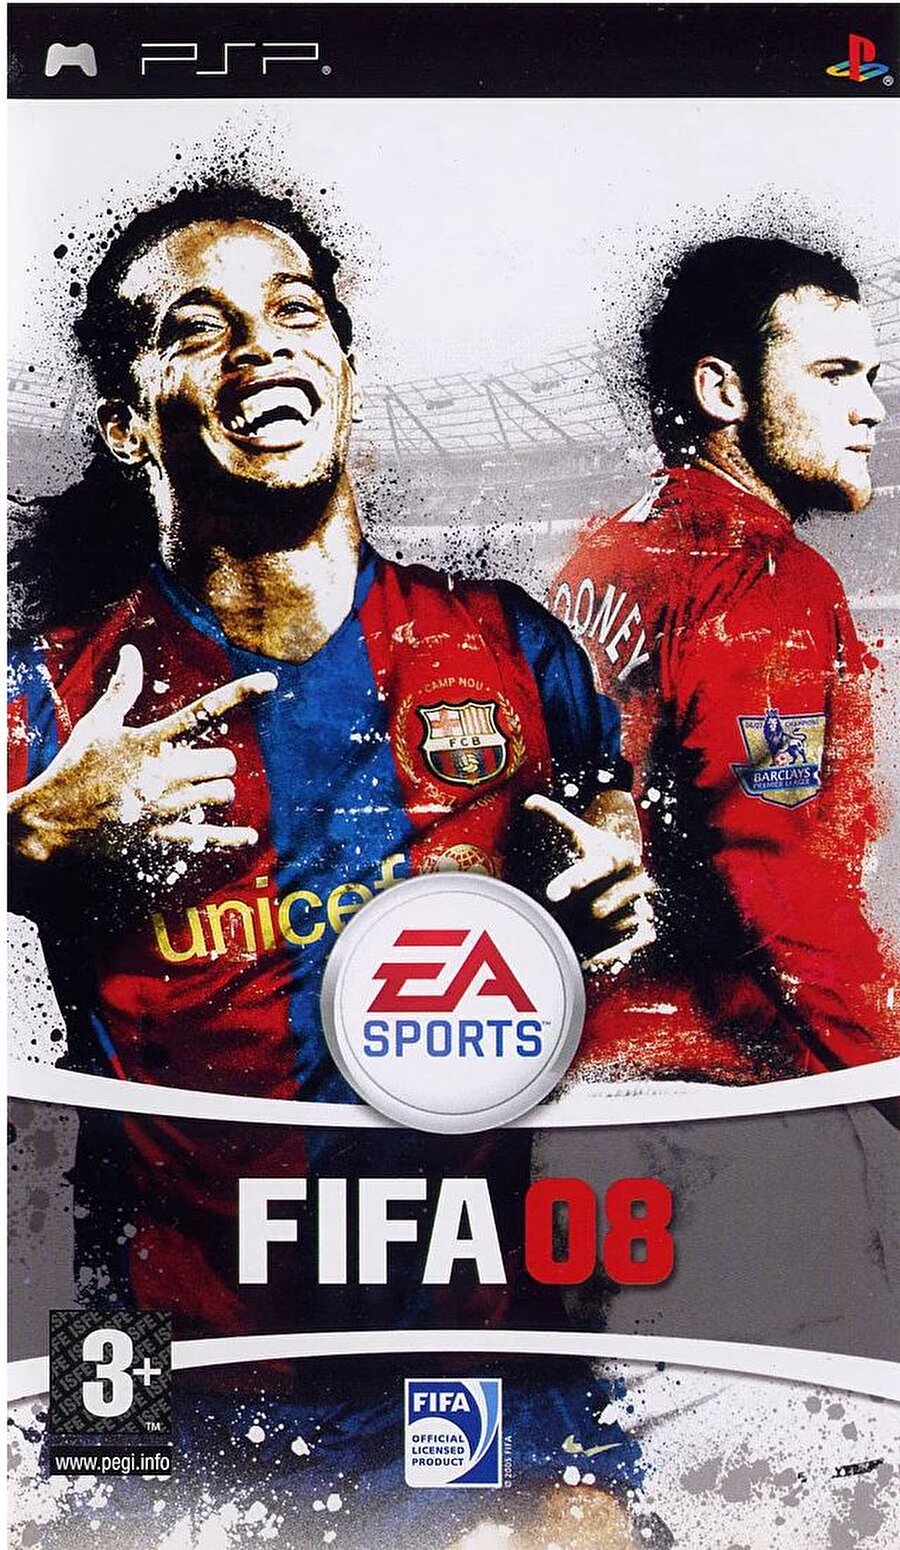 FIFA 08

                                    Wayne Rooney (Manchester United)
Ronaldinho (Barcelona)
                                